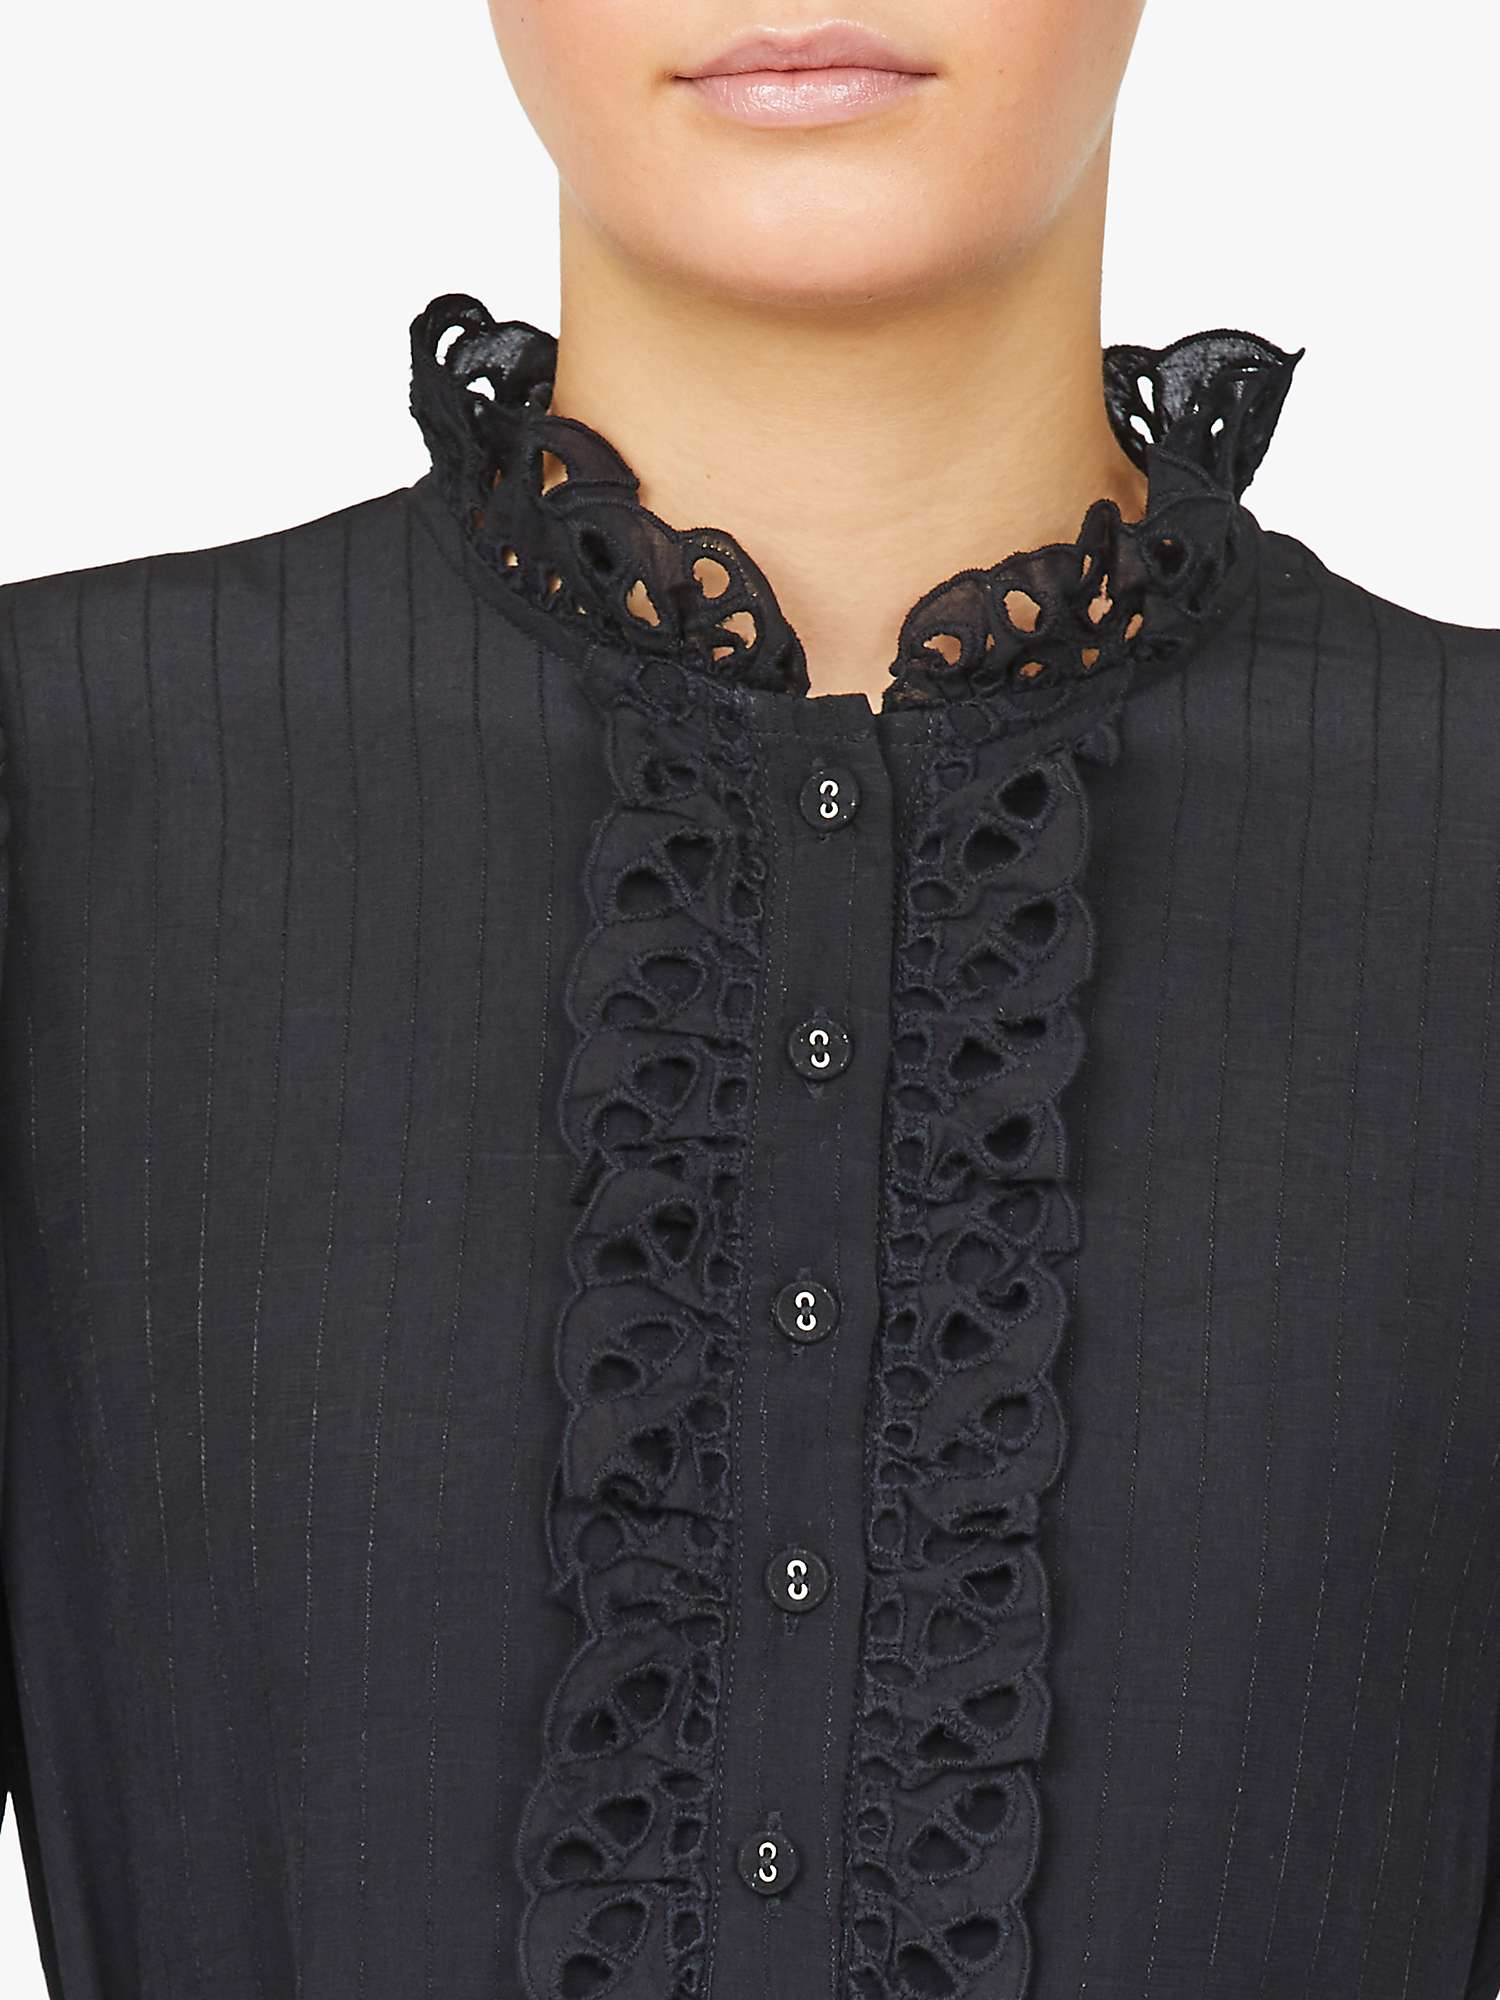 Buy Sisters Point Viada Lace Feminine Dress, Black Online at johnlewis.com